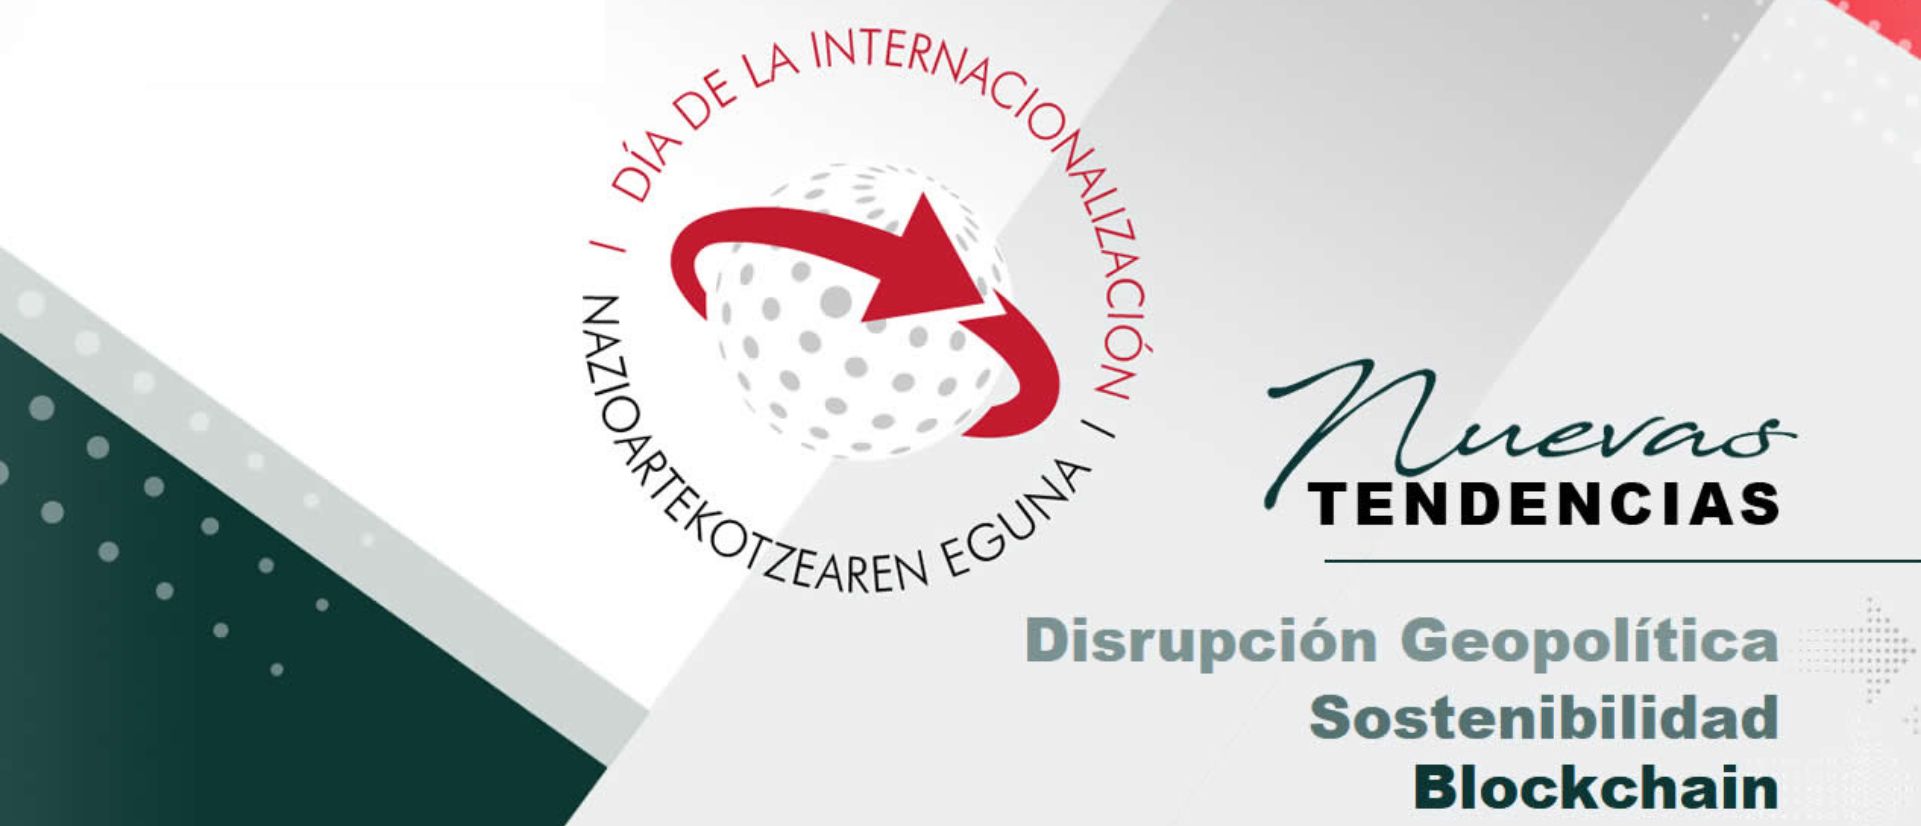 Internationalization Day of Navarra: Round table “Blockchain and international trade”. 